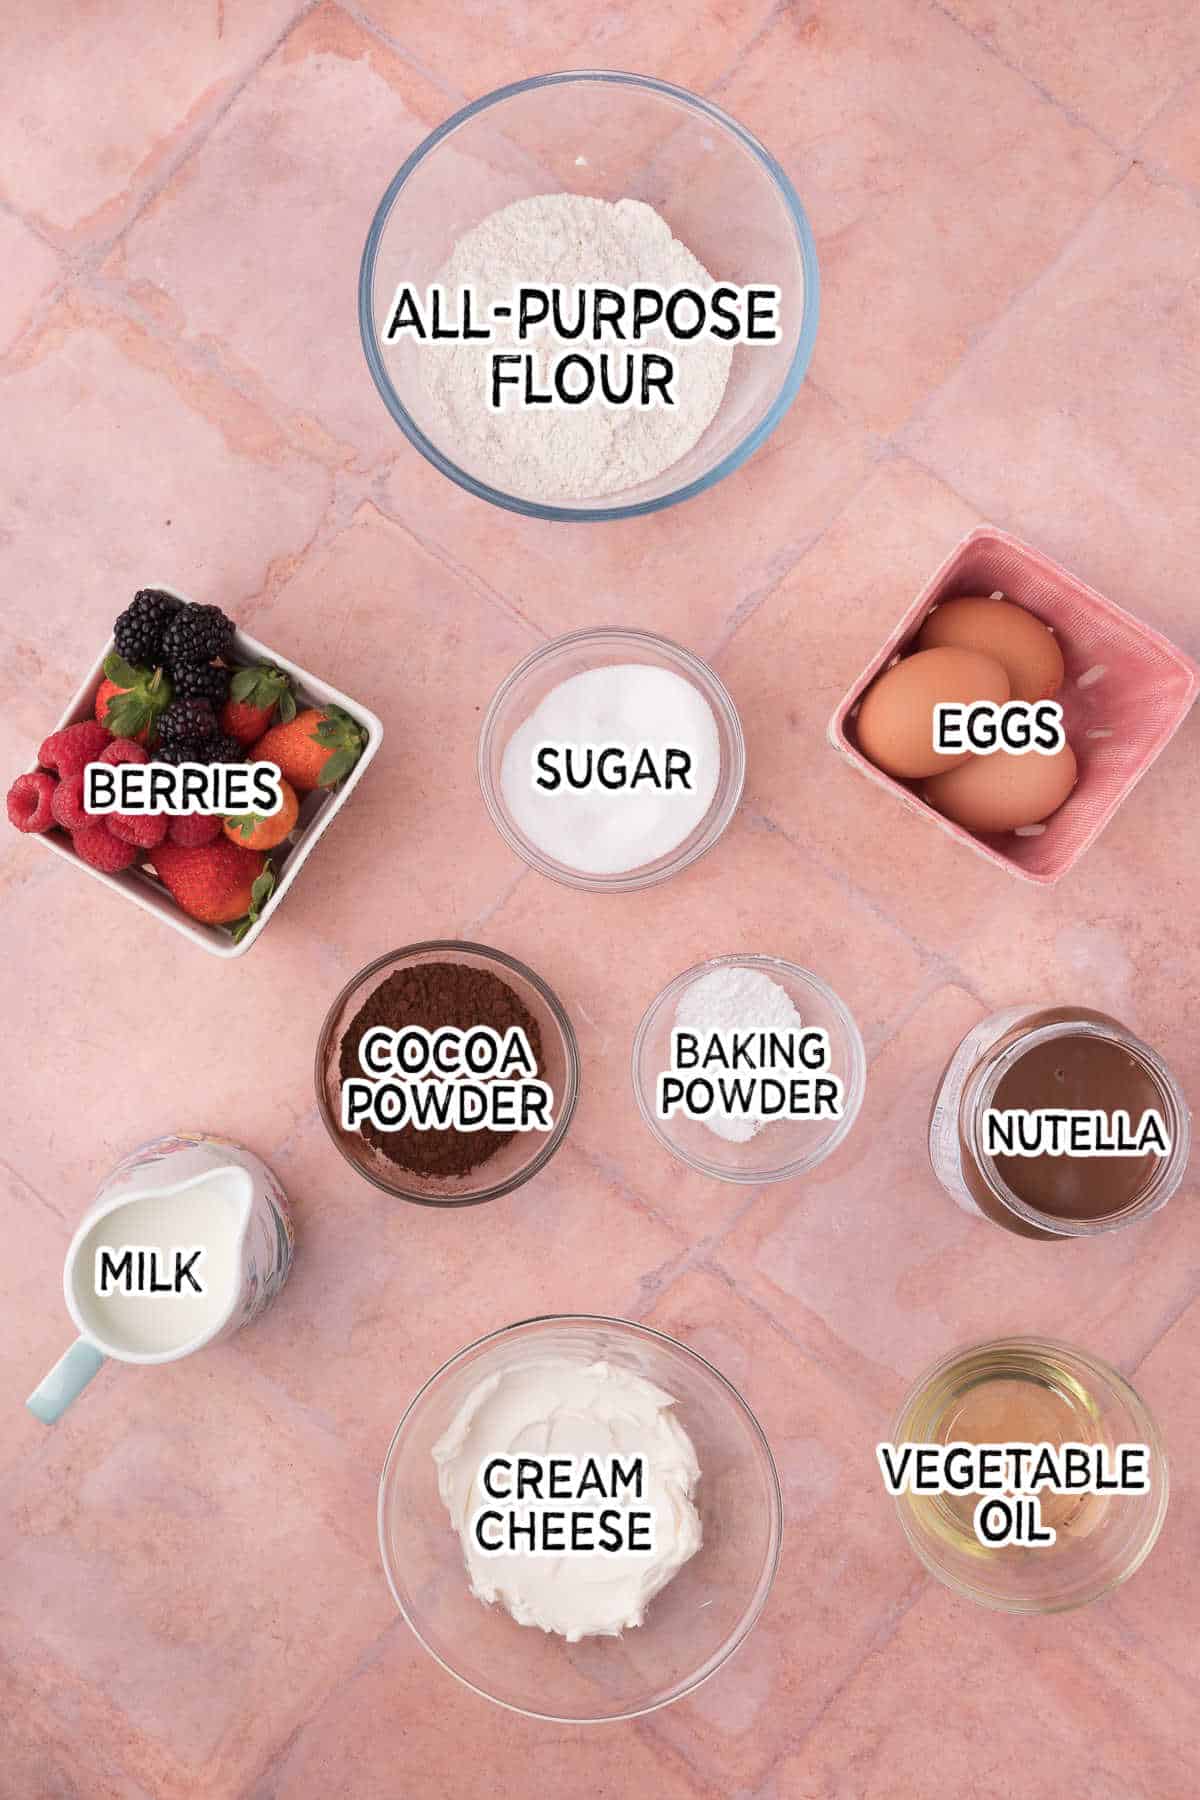 Ingredients to make chocolate waffles.